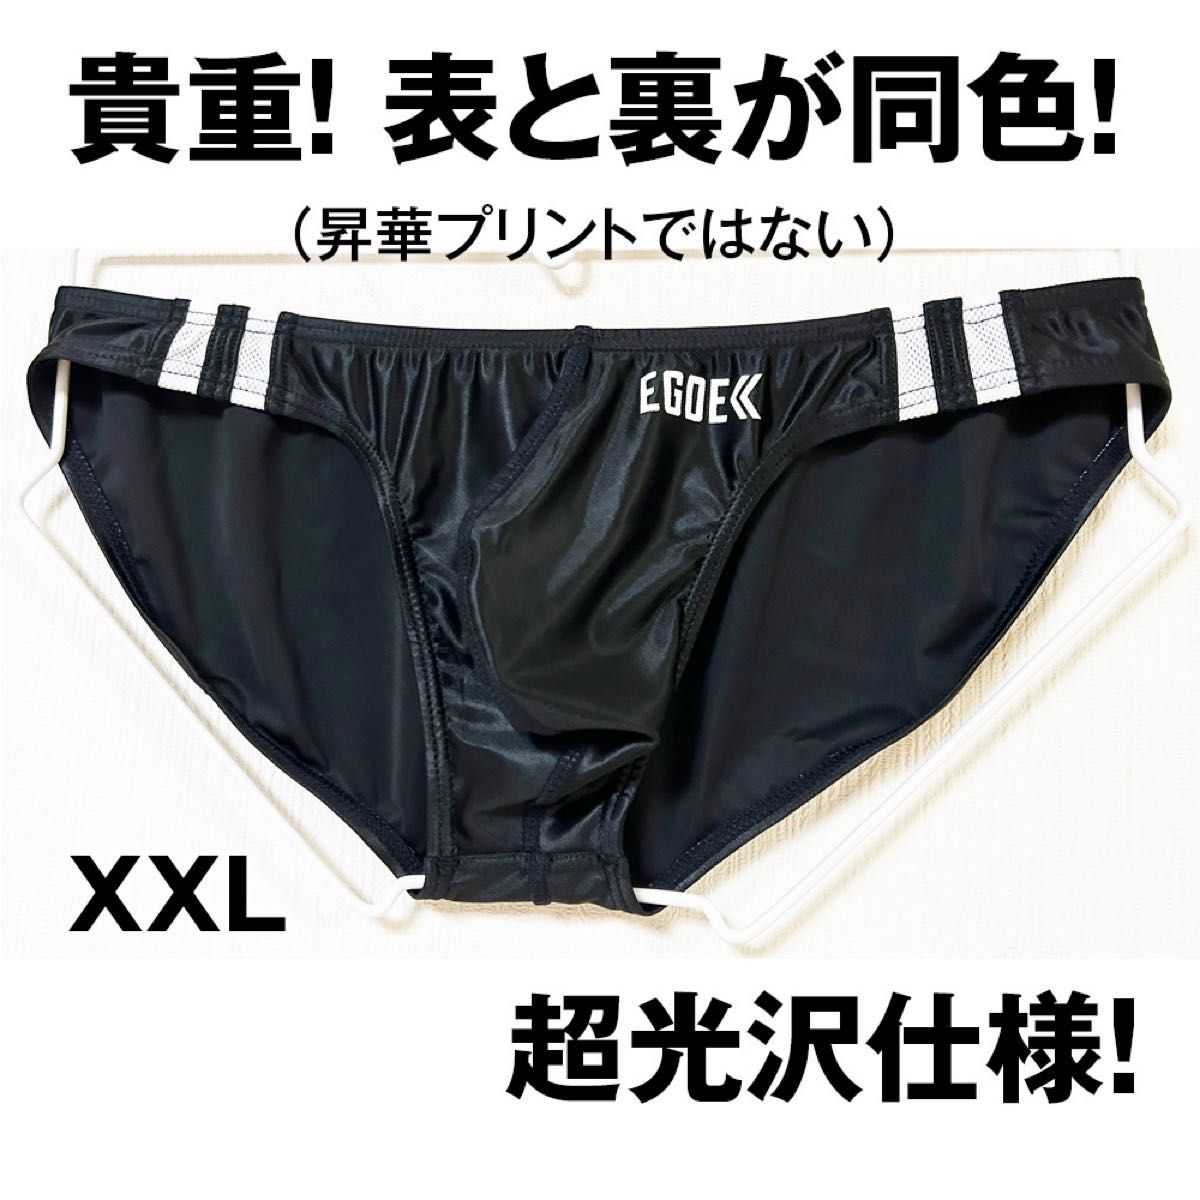 GX3 競パン 風 +光沢 ビキニ XXL EGDE AQUX SURFBLADE asics arena 